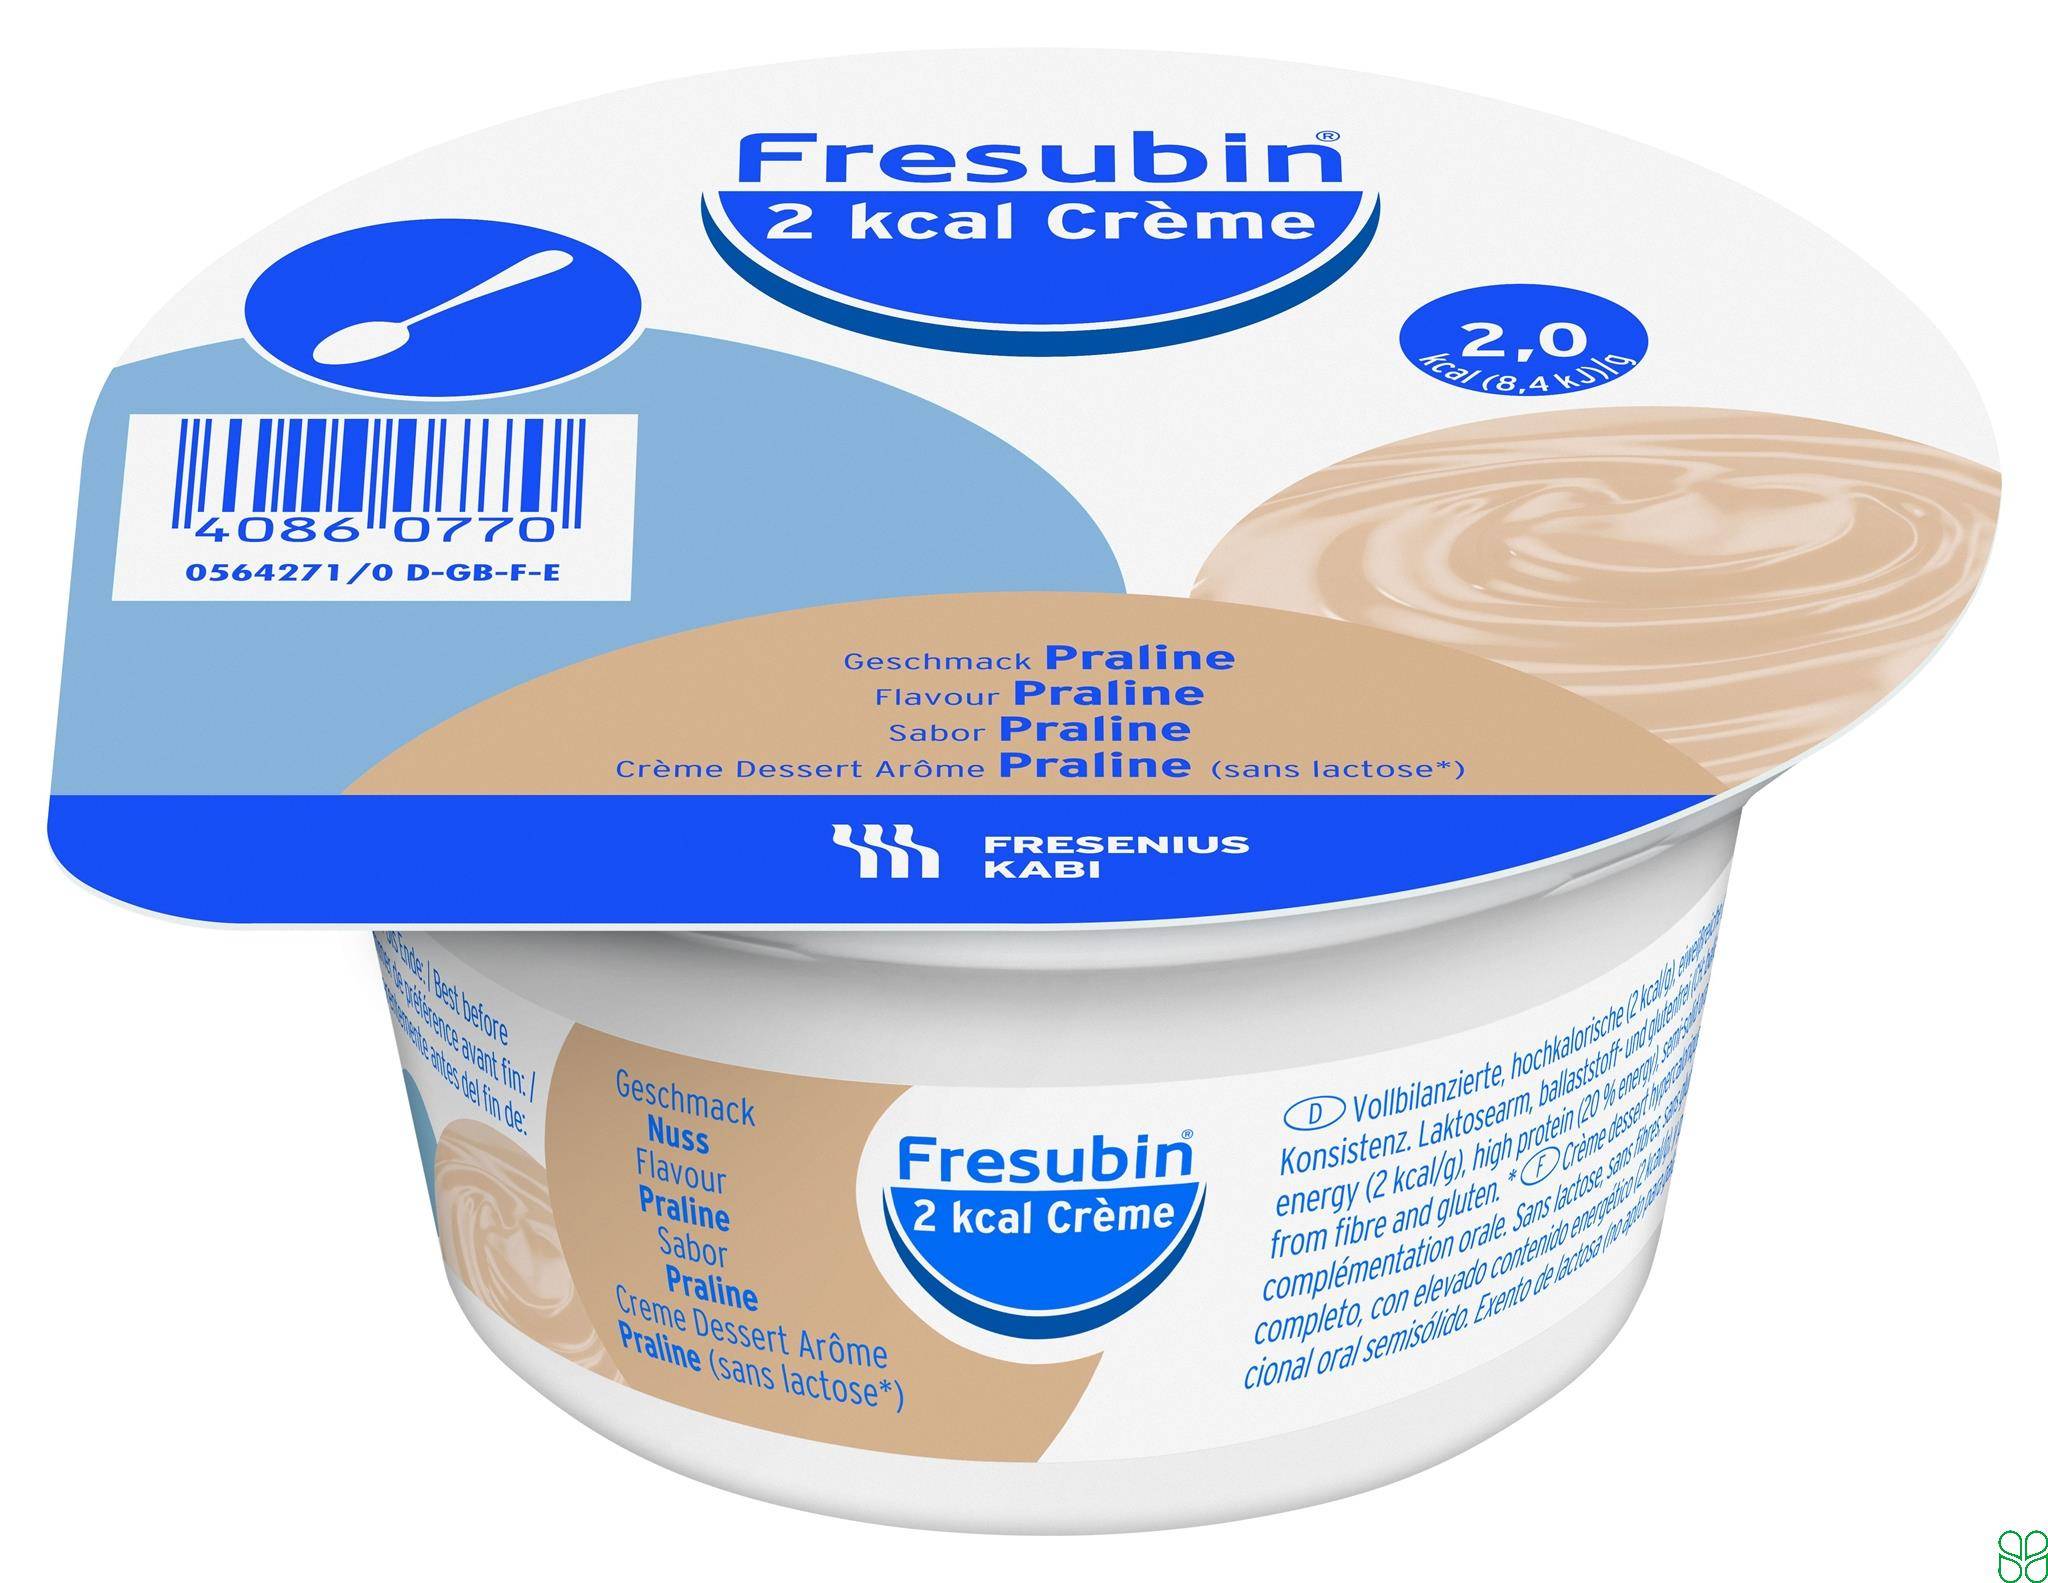 Fresubin 2 Kcal Creme Dieetvoeding Praline 4x 125g